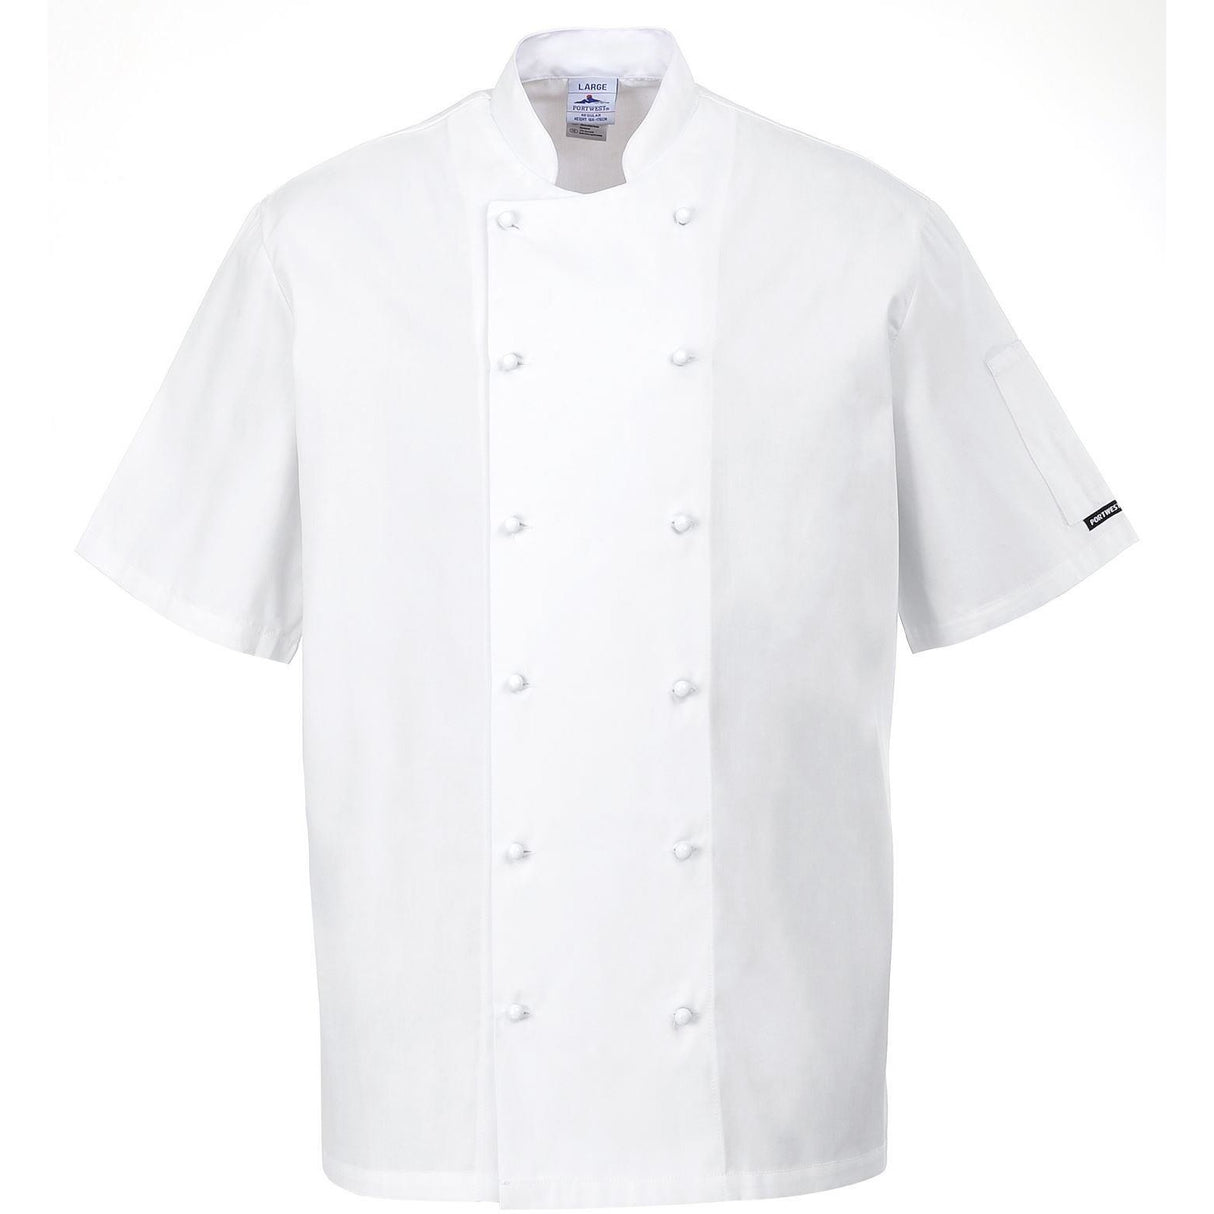 Portwest Newport Chefs Jacket